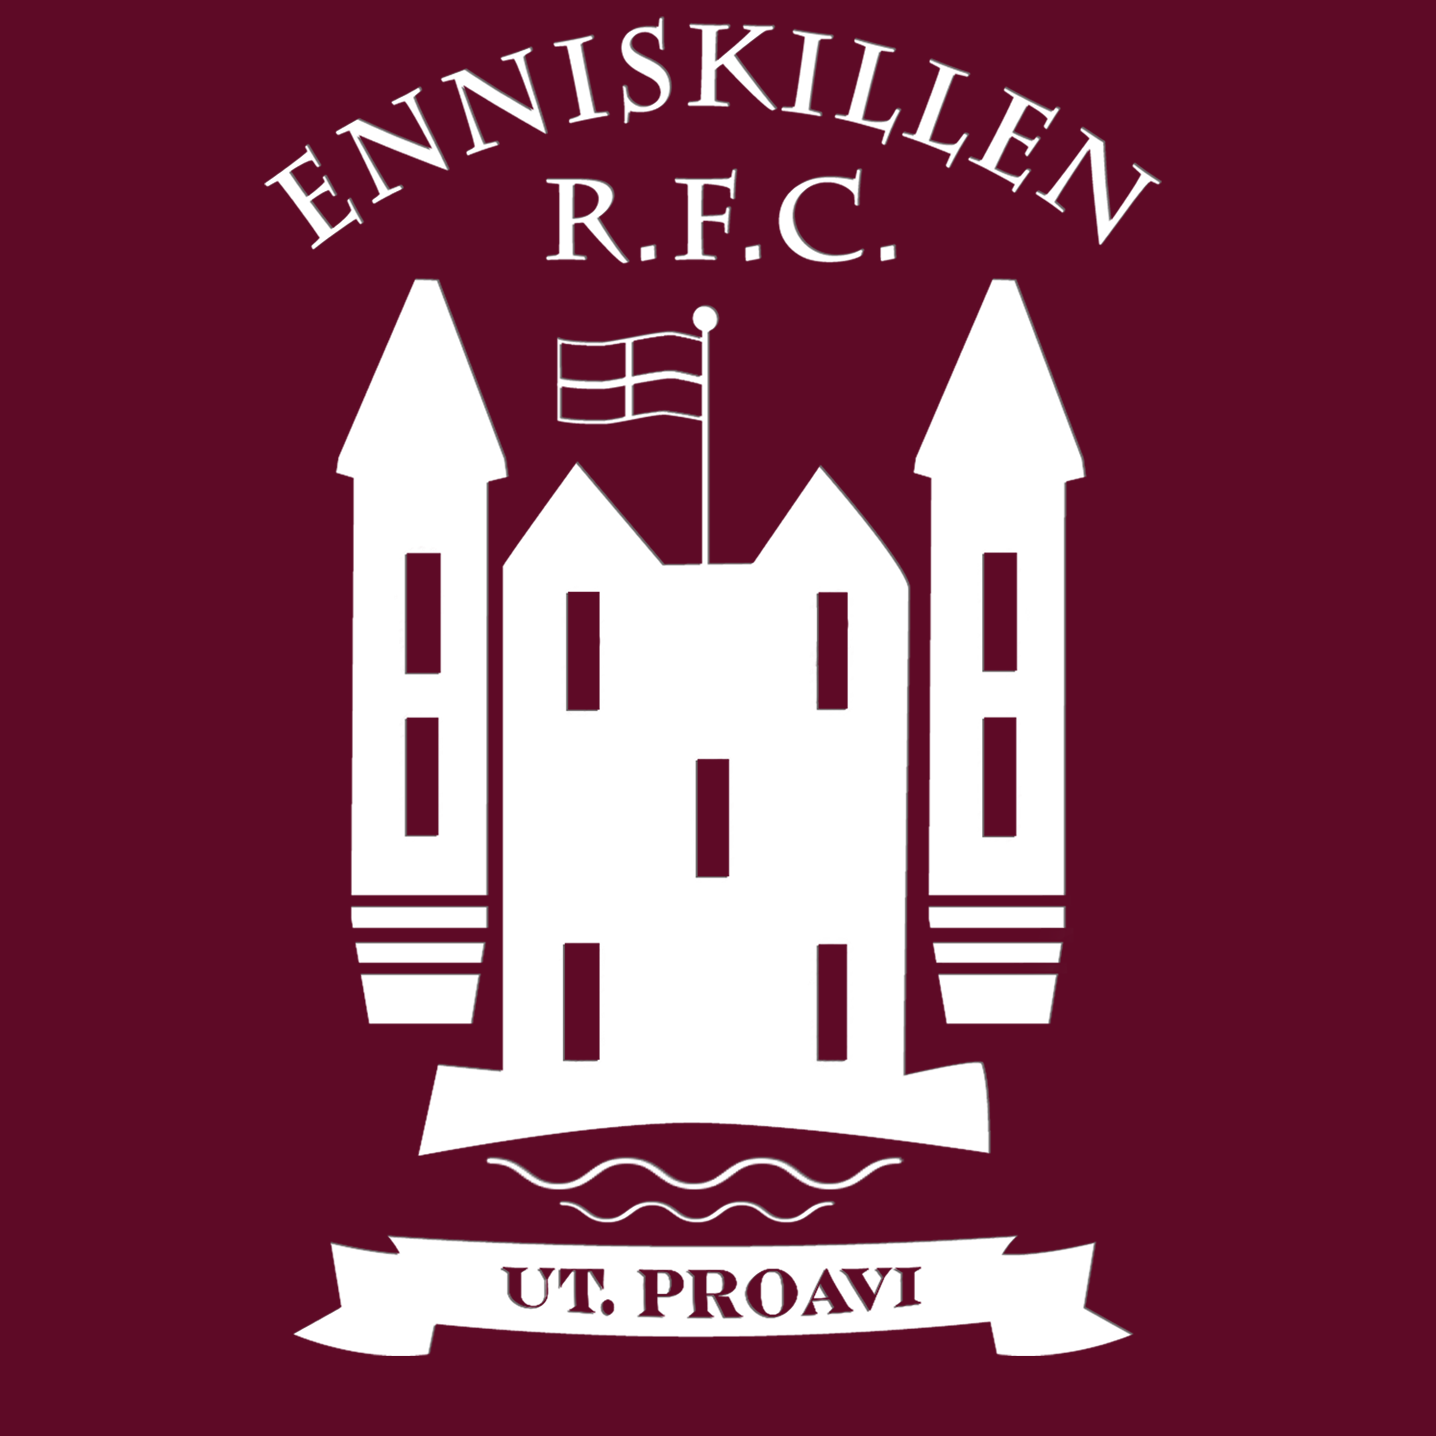 Enniskillen RFC